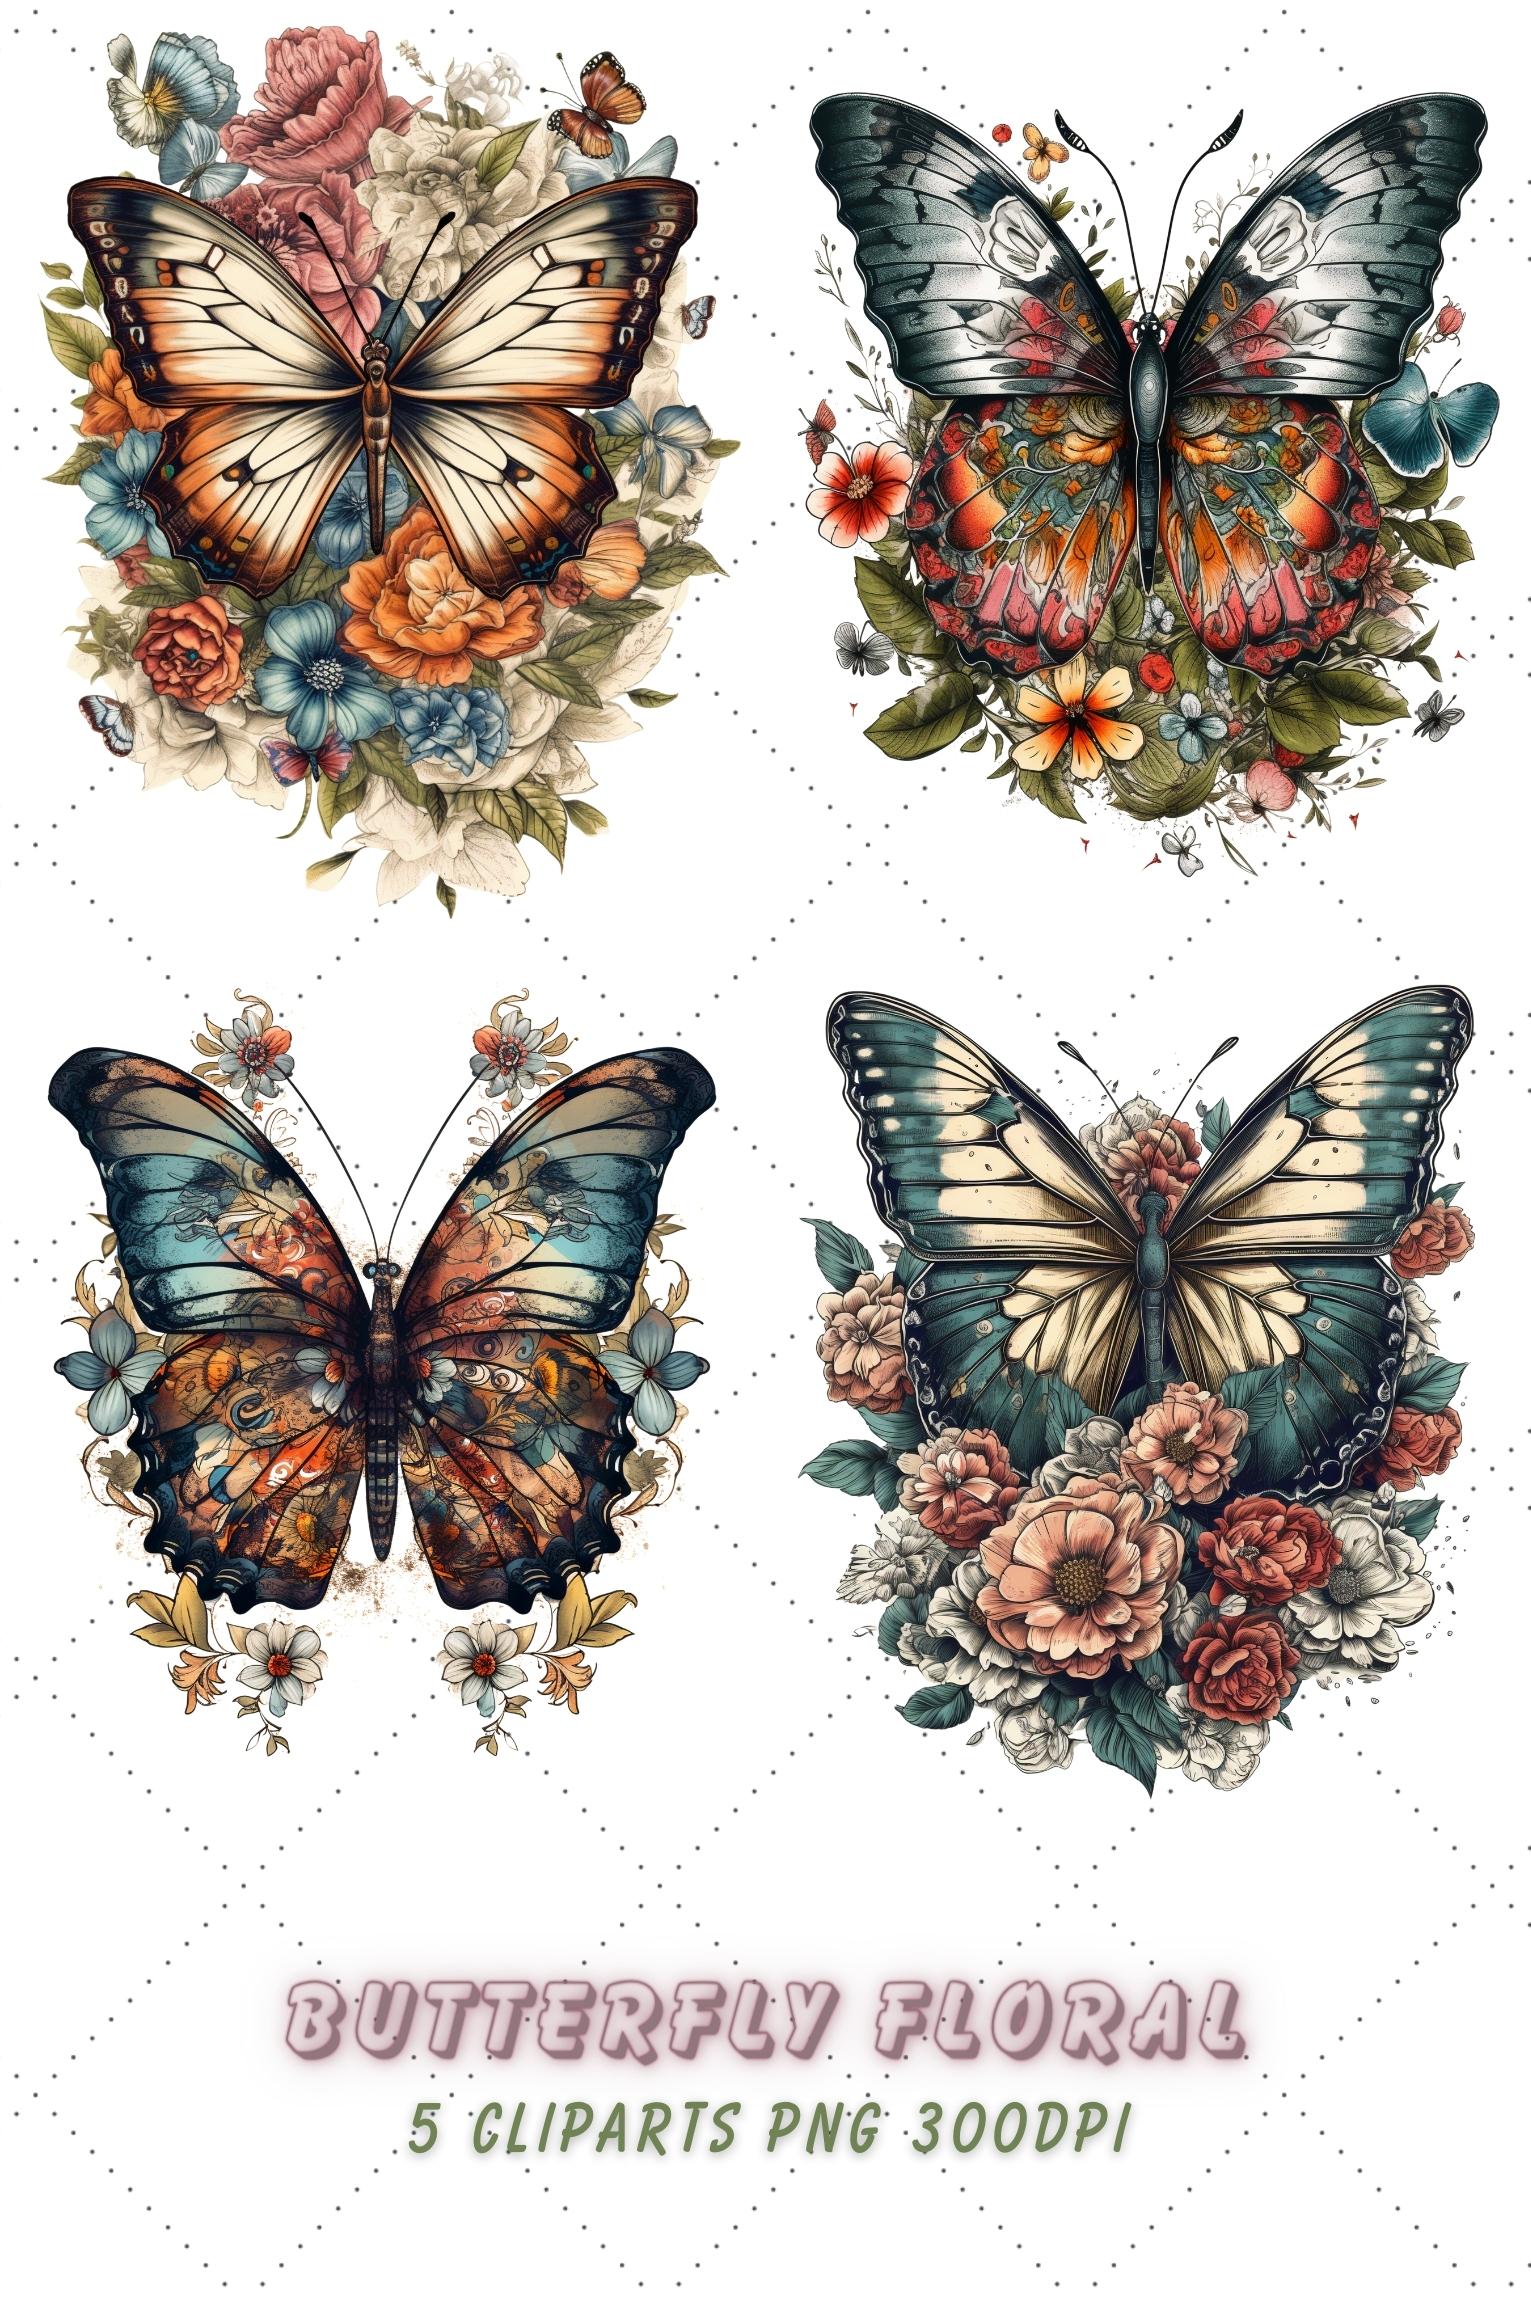 Retro Butterfly floral Clipart Bundle, Sublimation, Butterfly floral pinterest preview image.